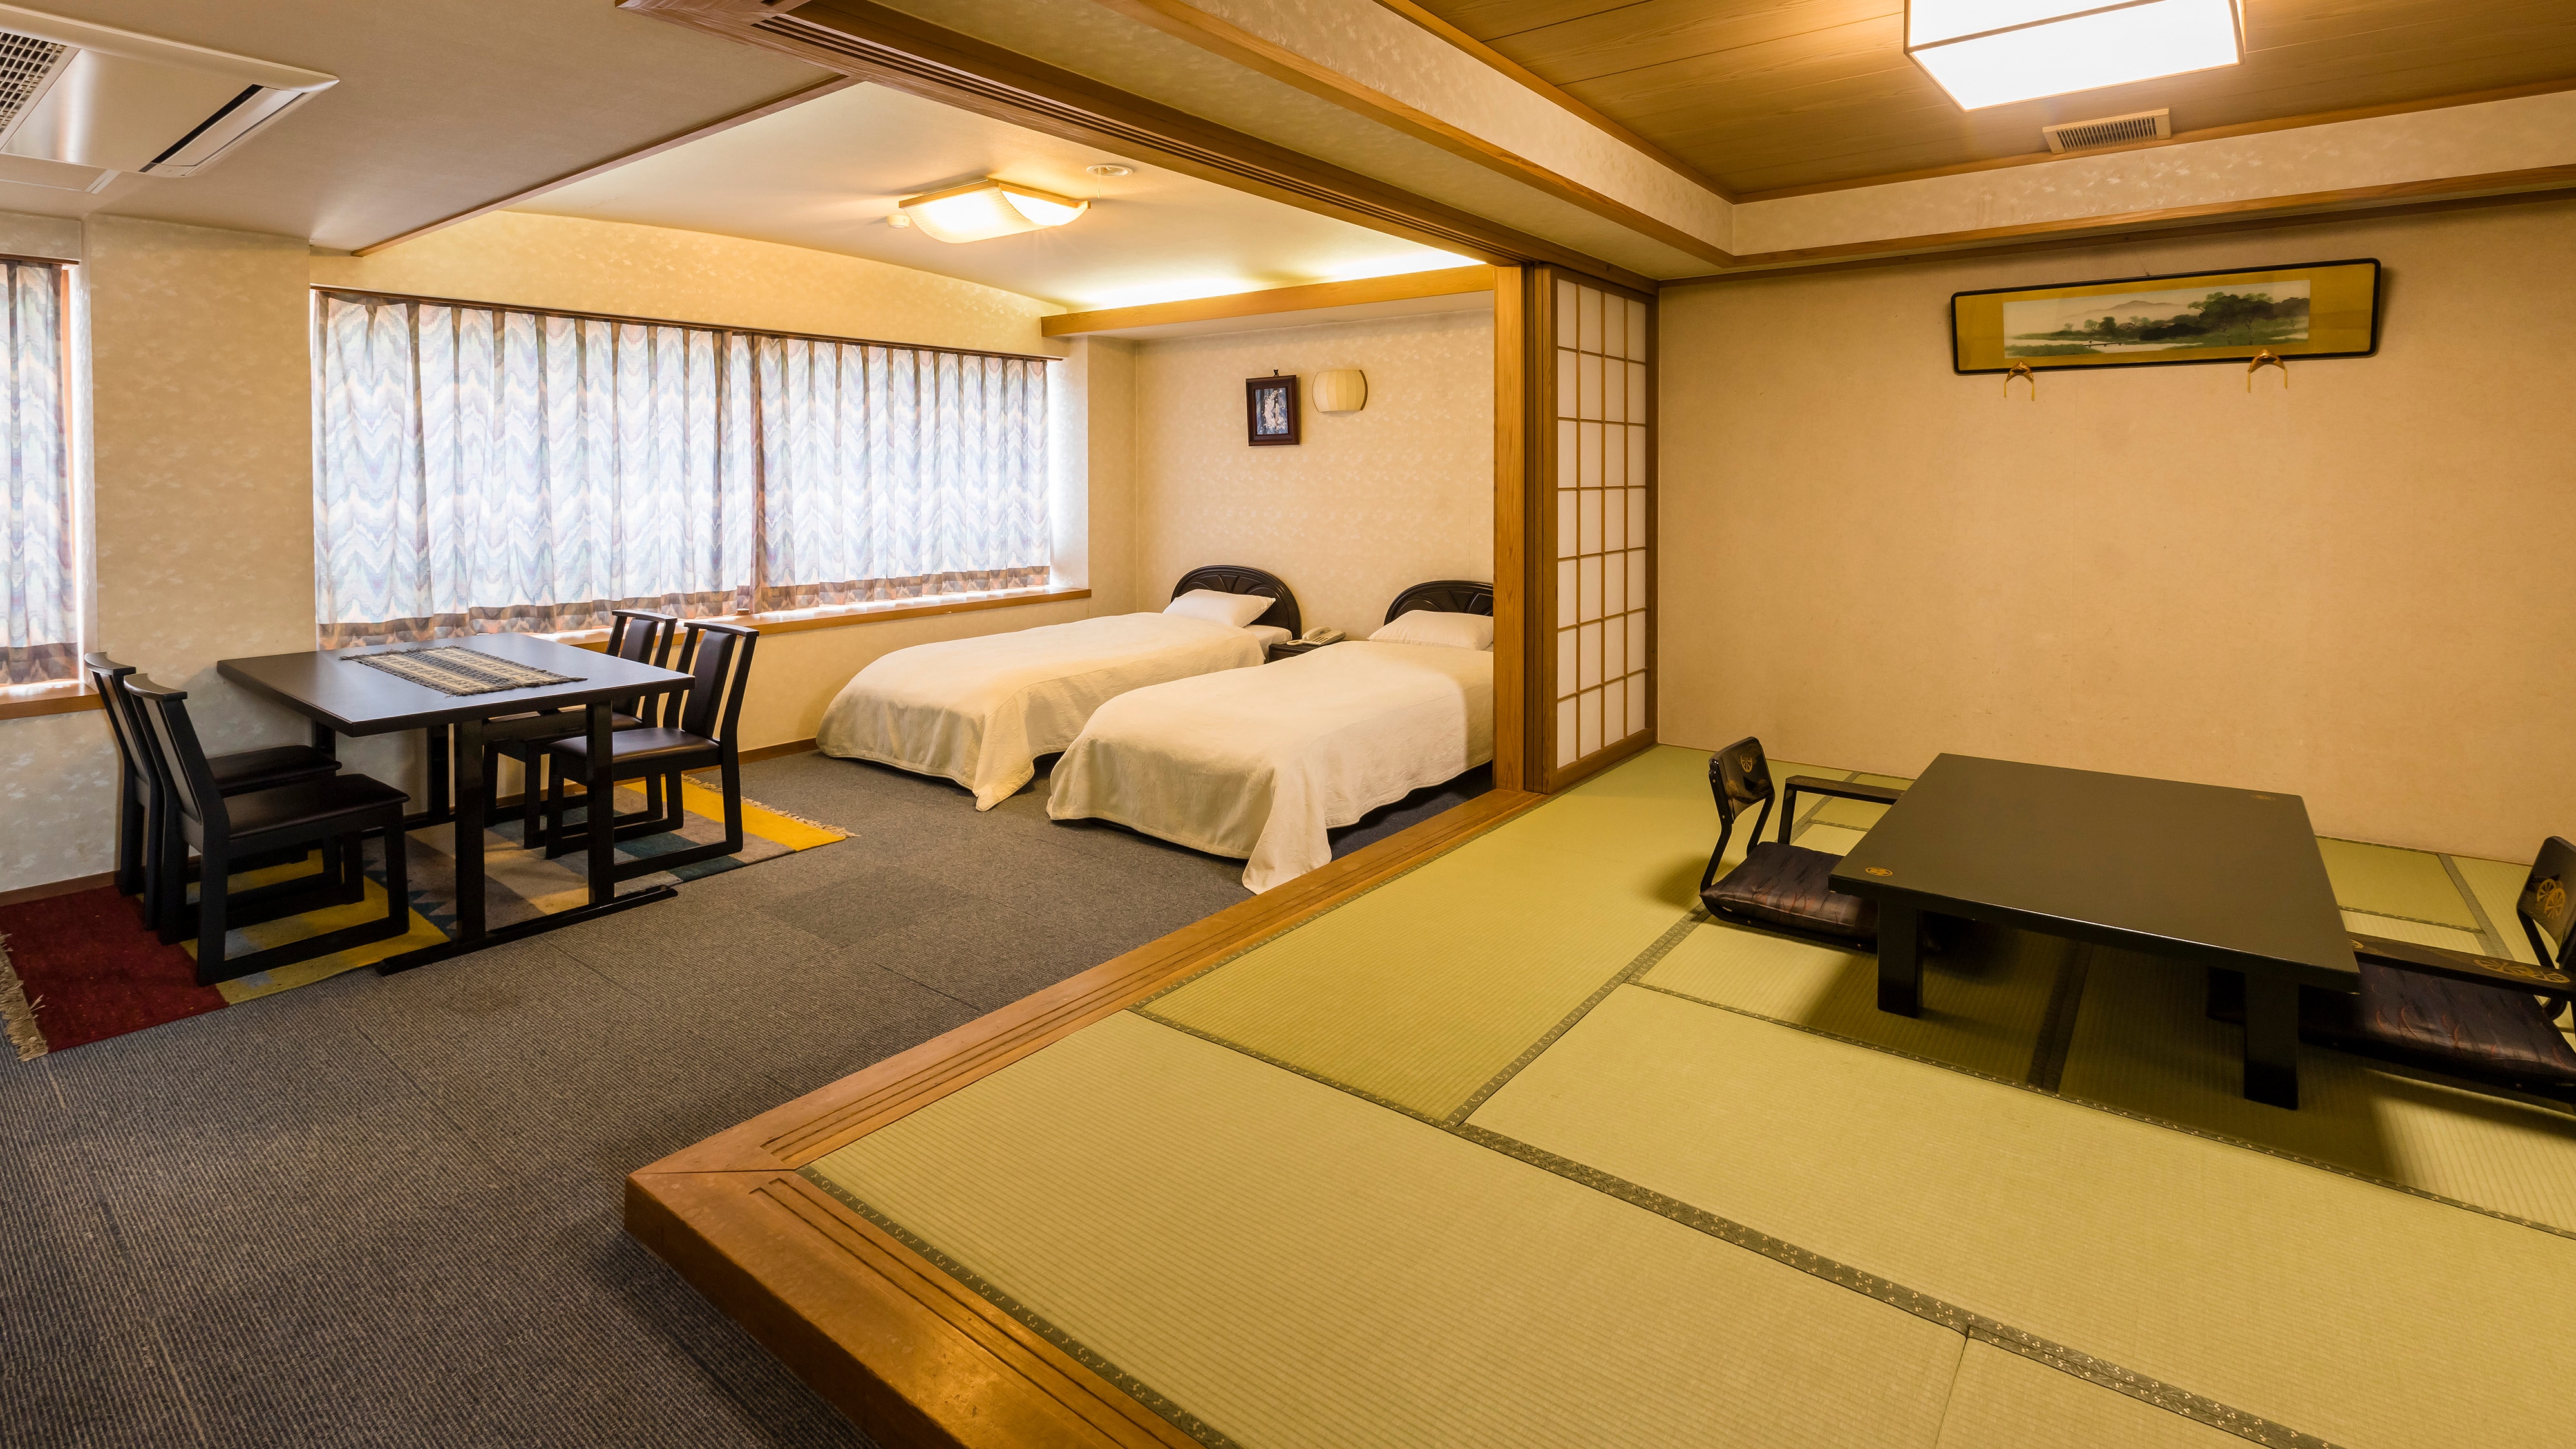 Kamar khusus Jepang dan Barat satu kelas 10 tikar tatami plus kamar tidur twin (bebas rokok)